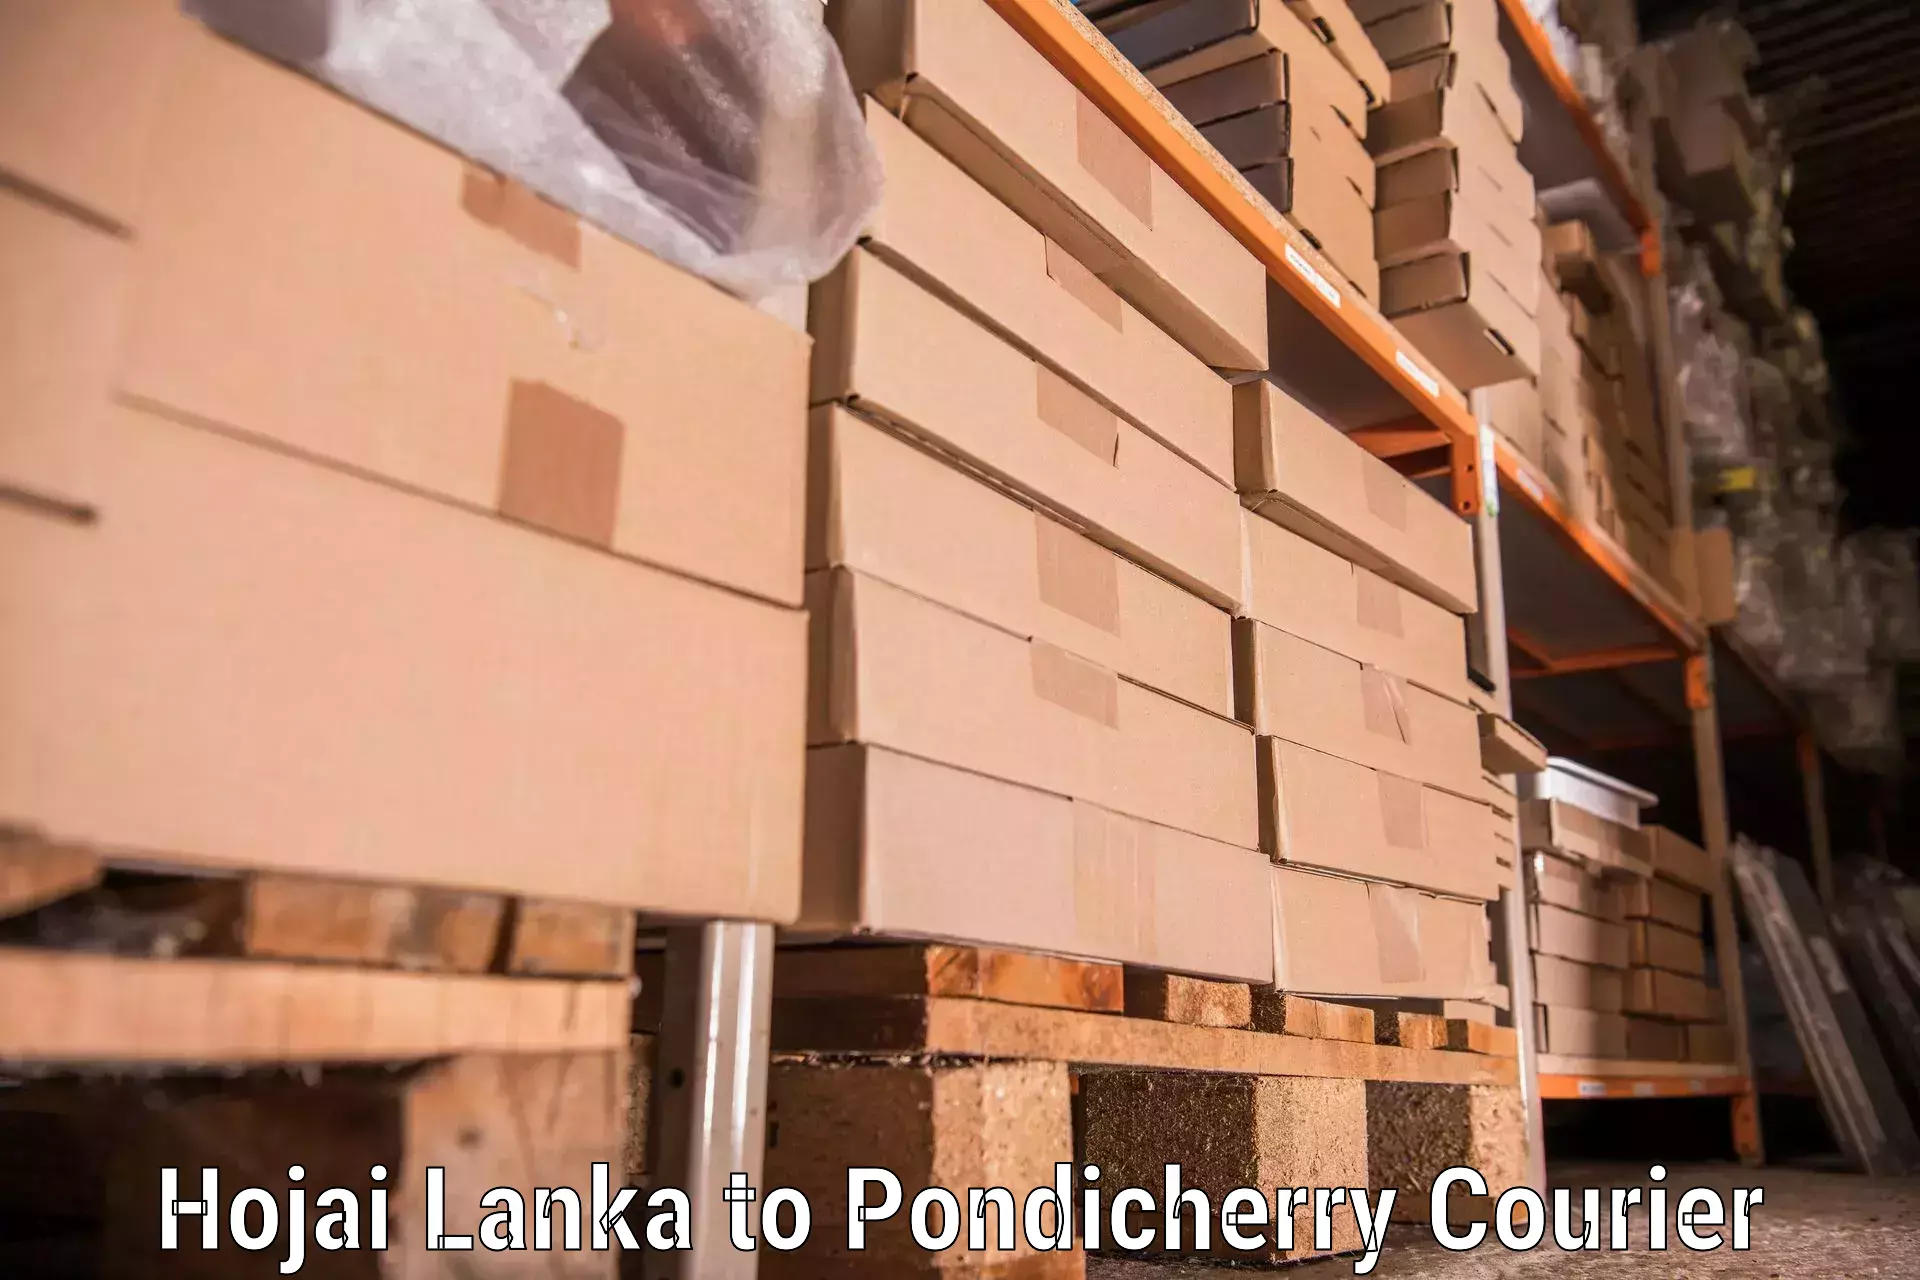 Professional furniture transport Hojai Lanka to Pondicherry